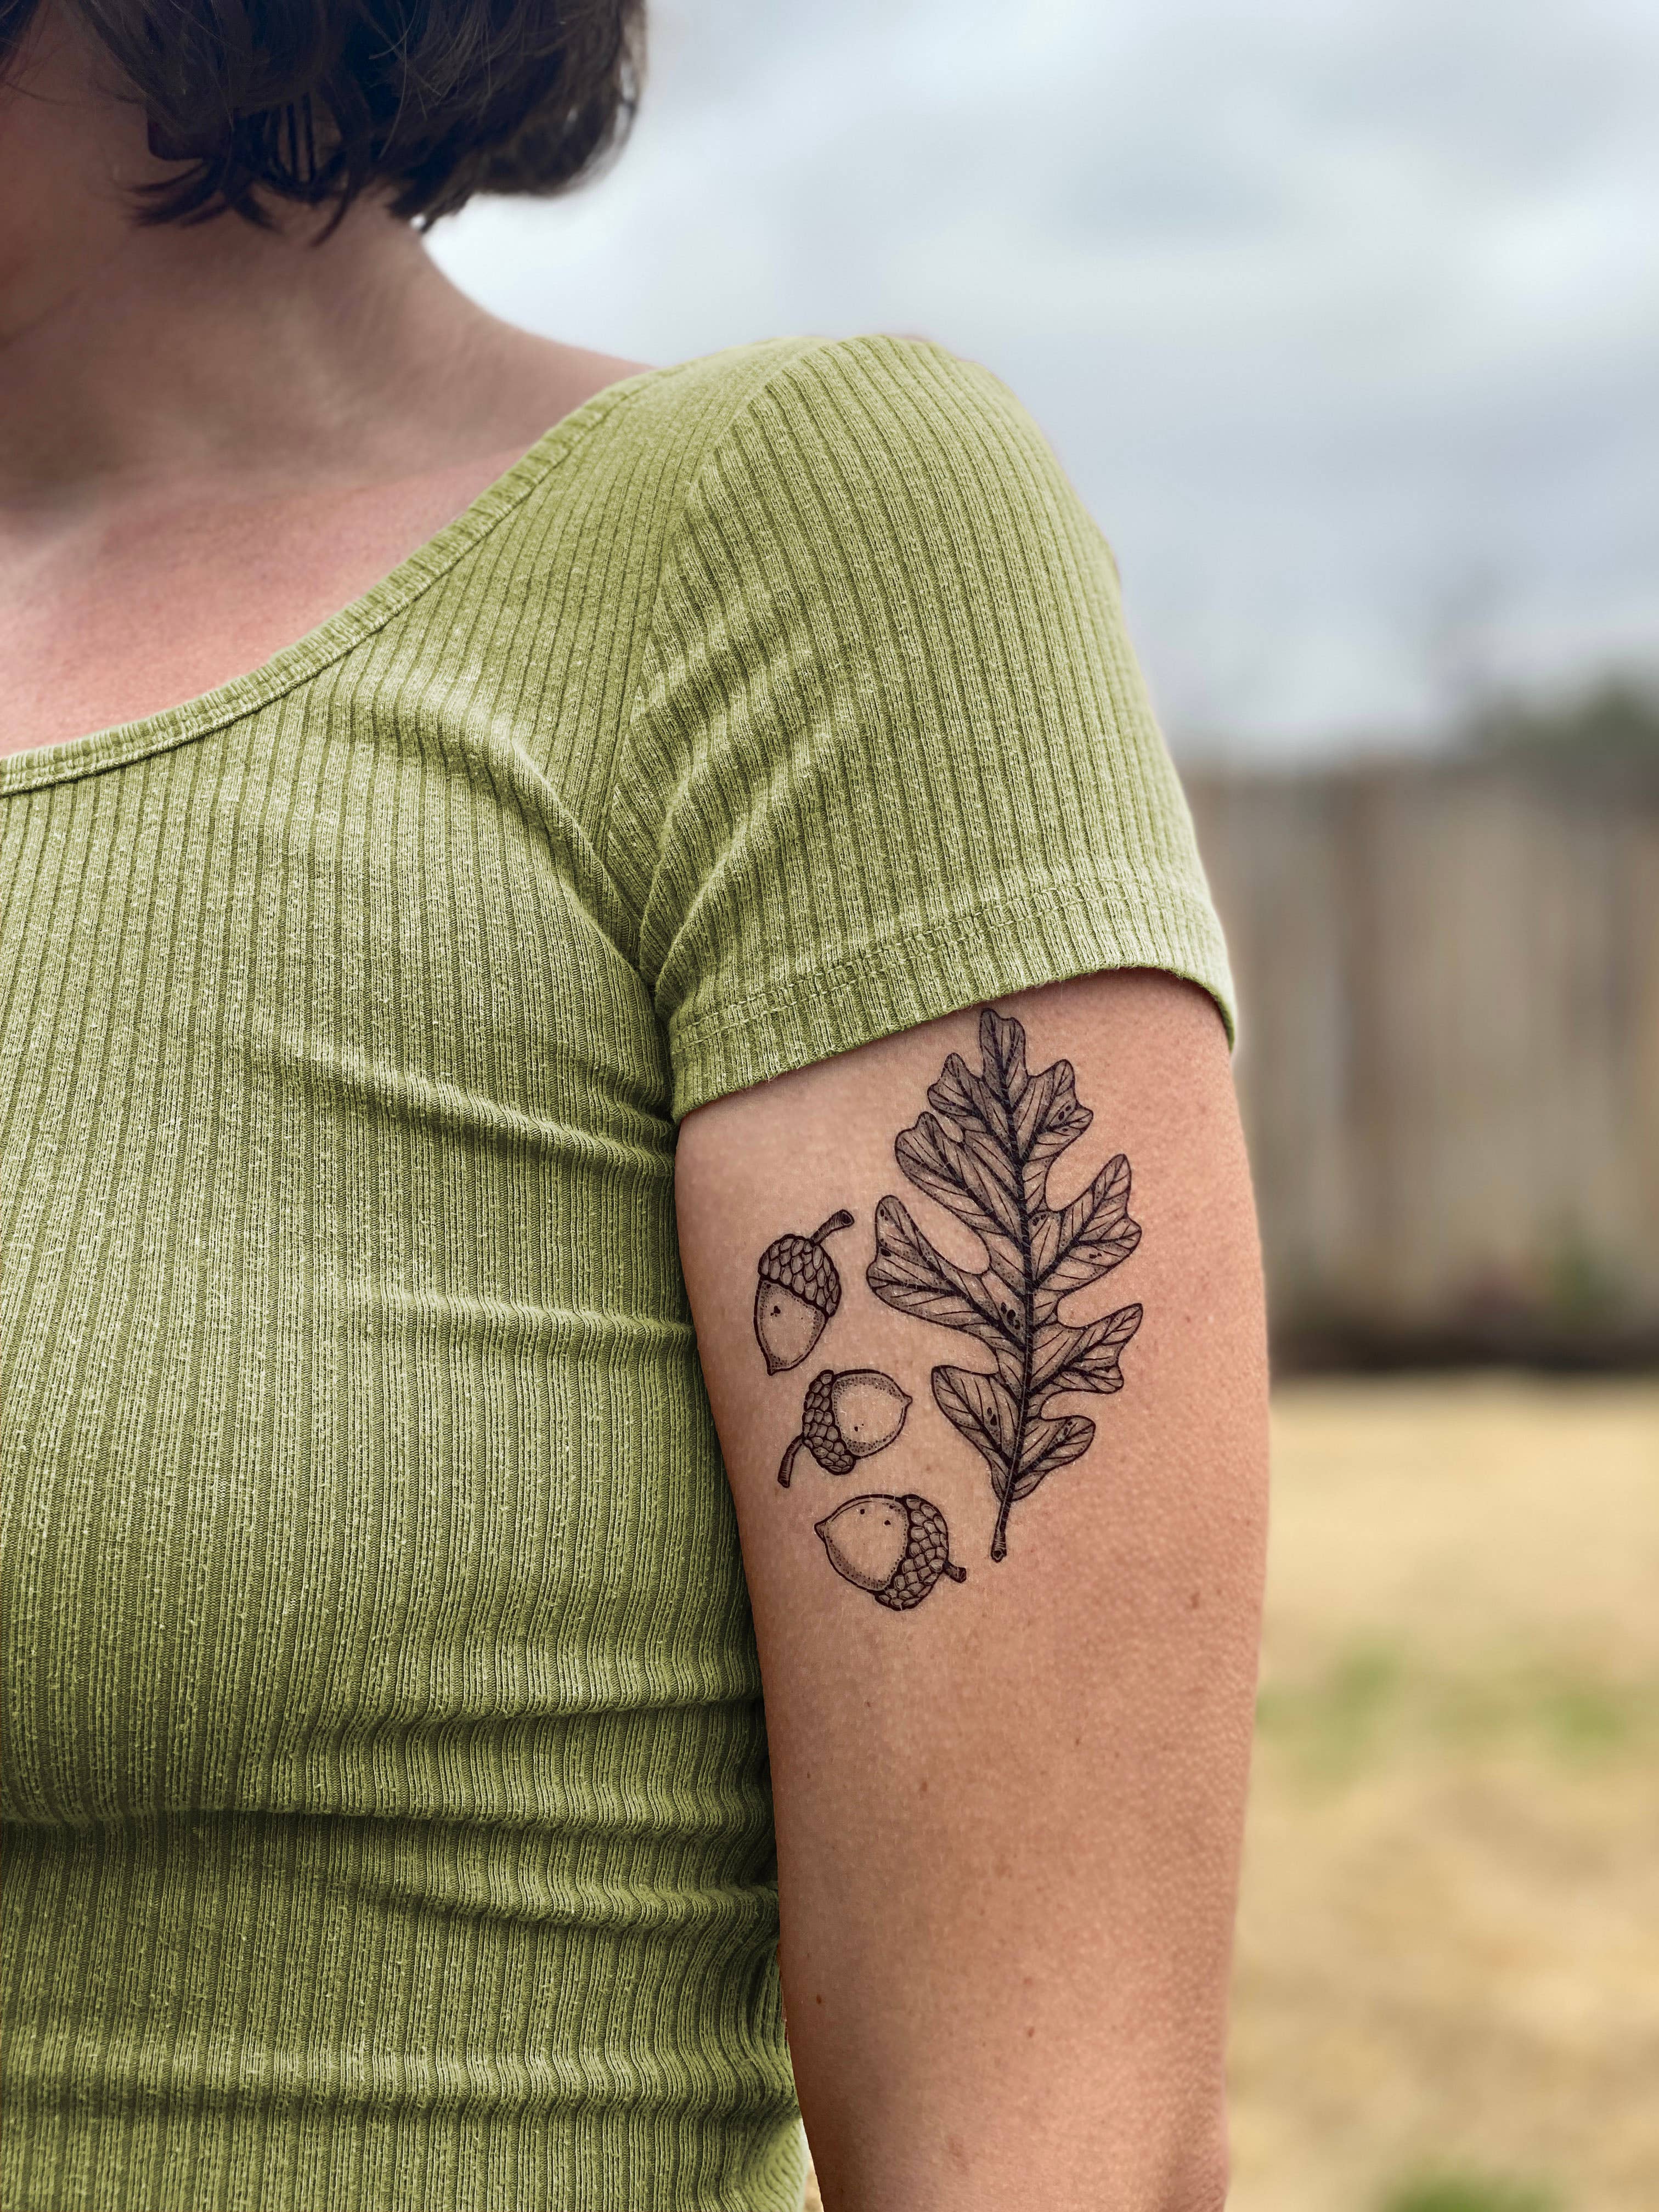 Fern Leaf Tattoo on an Arm · Free Stock Photo